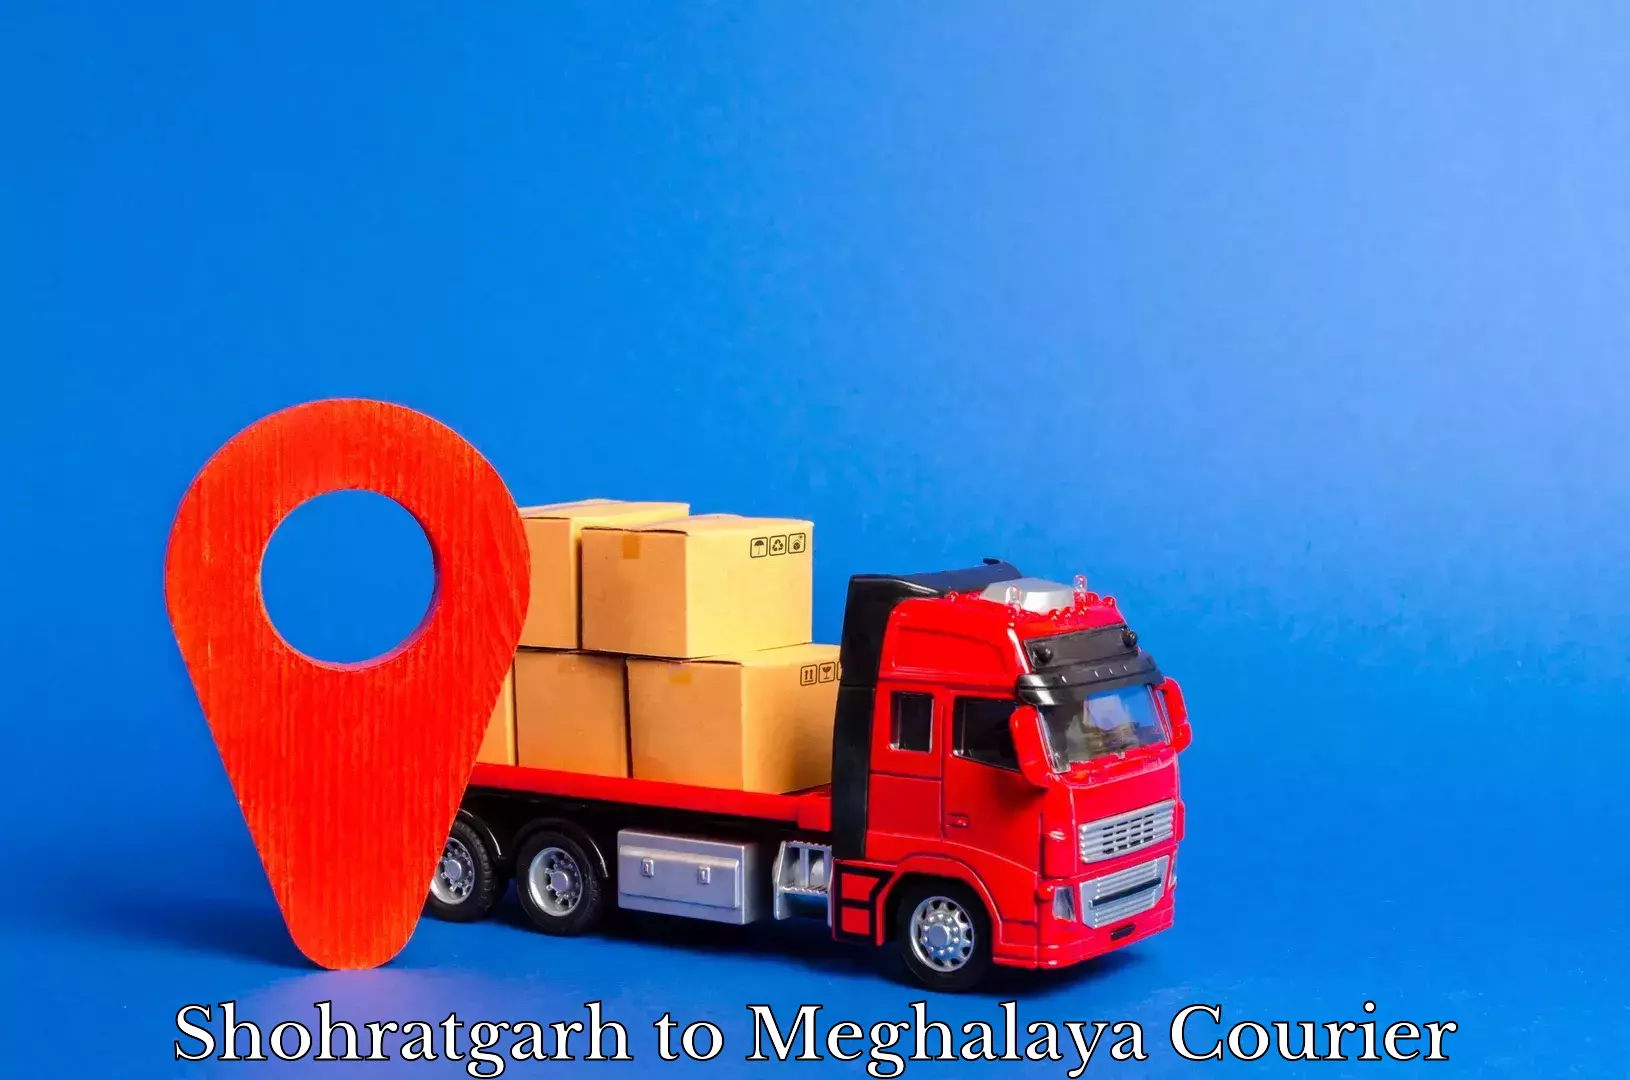 Efficient order fulfillment Shohratgarh to Meghalaya